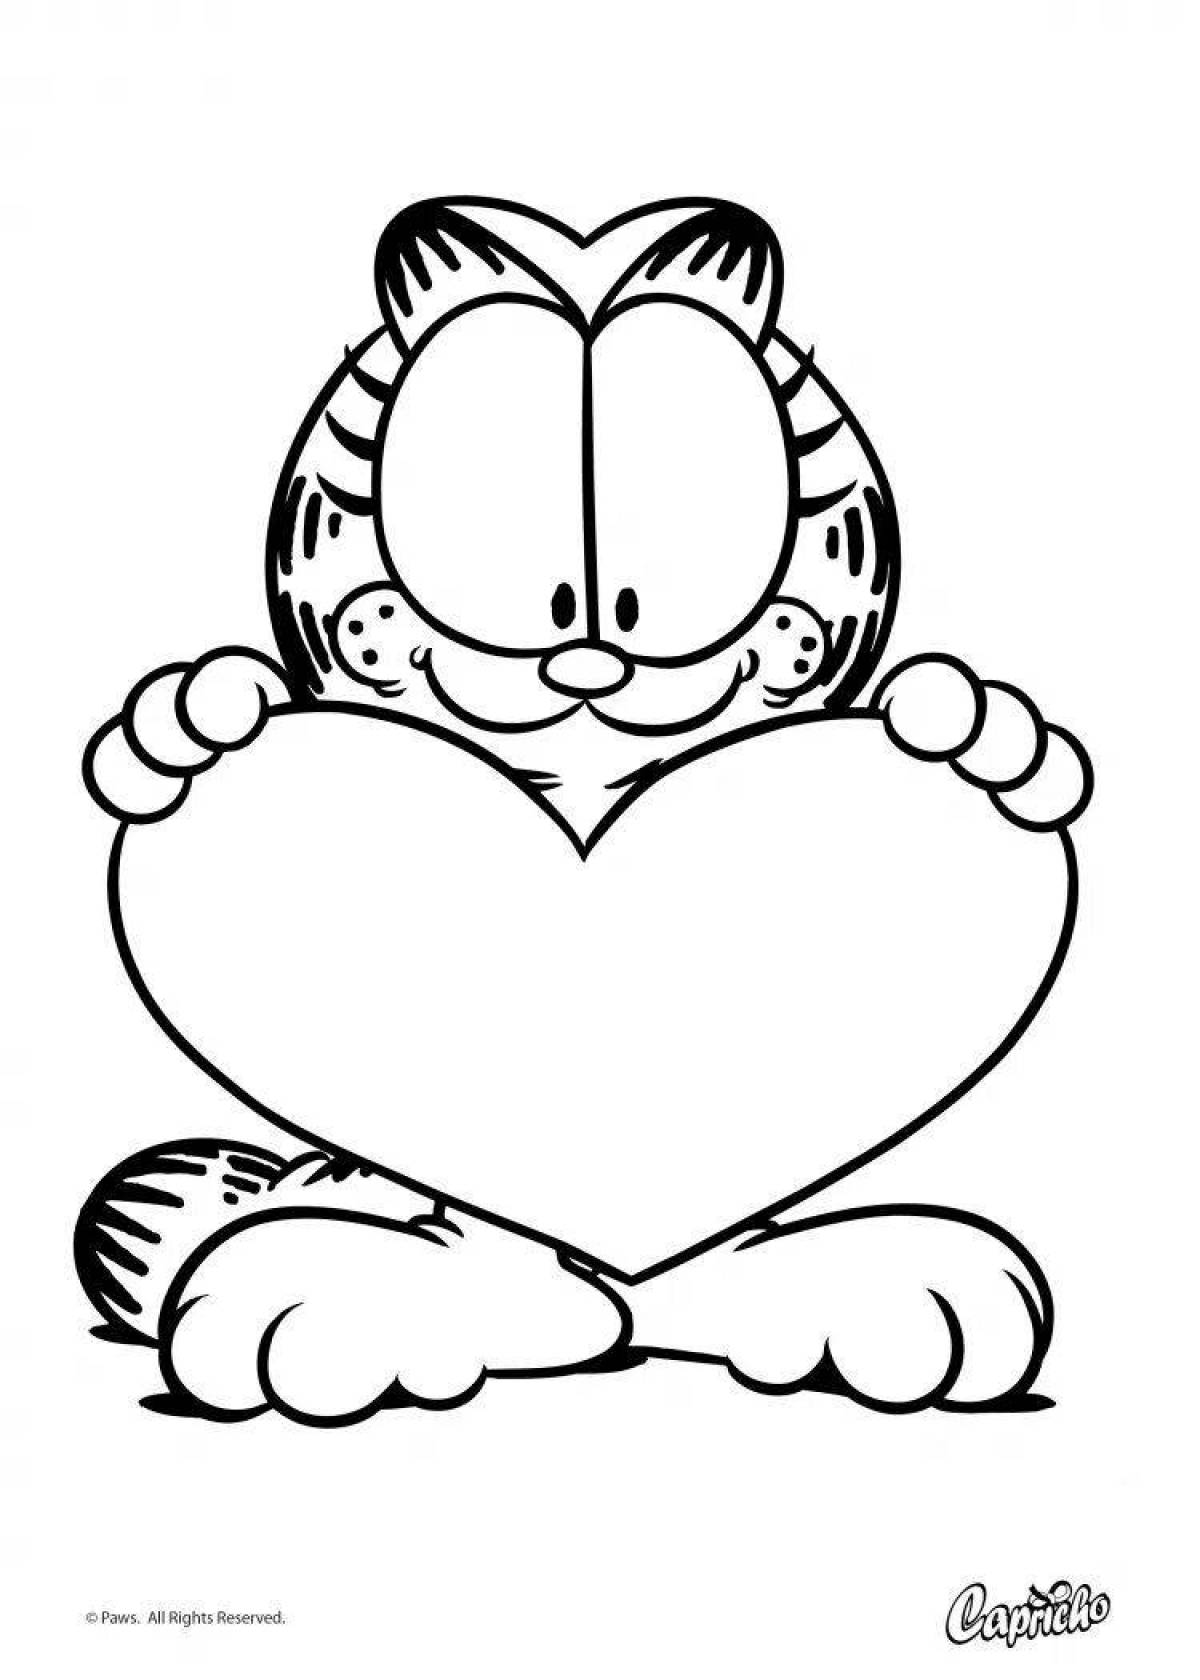 Garfield adorable coloring book